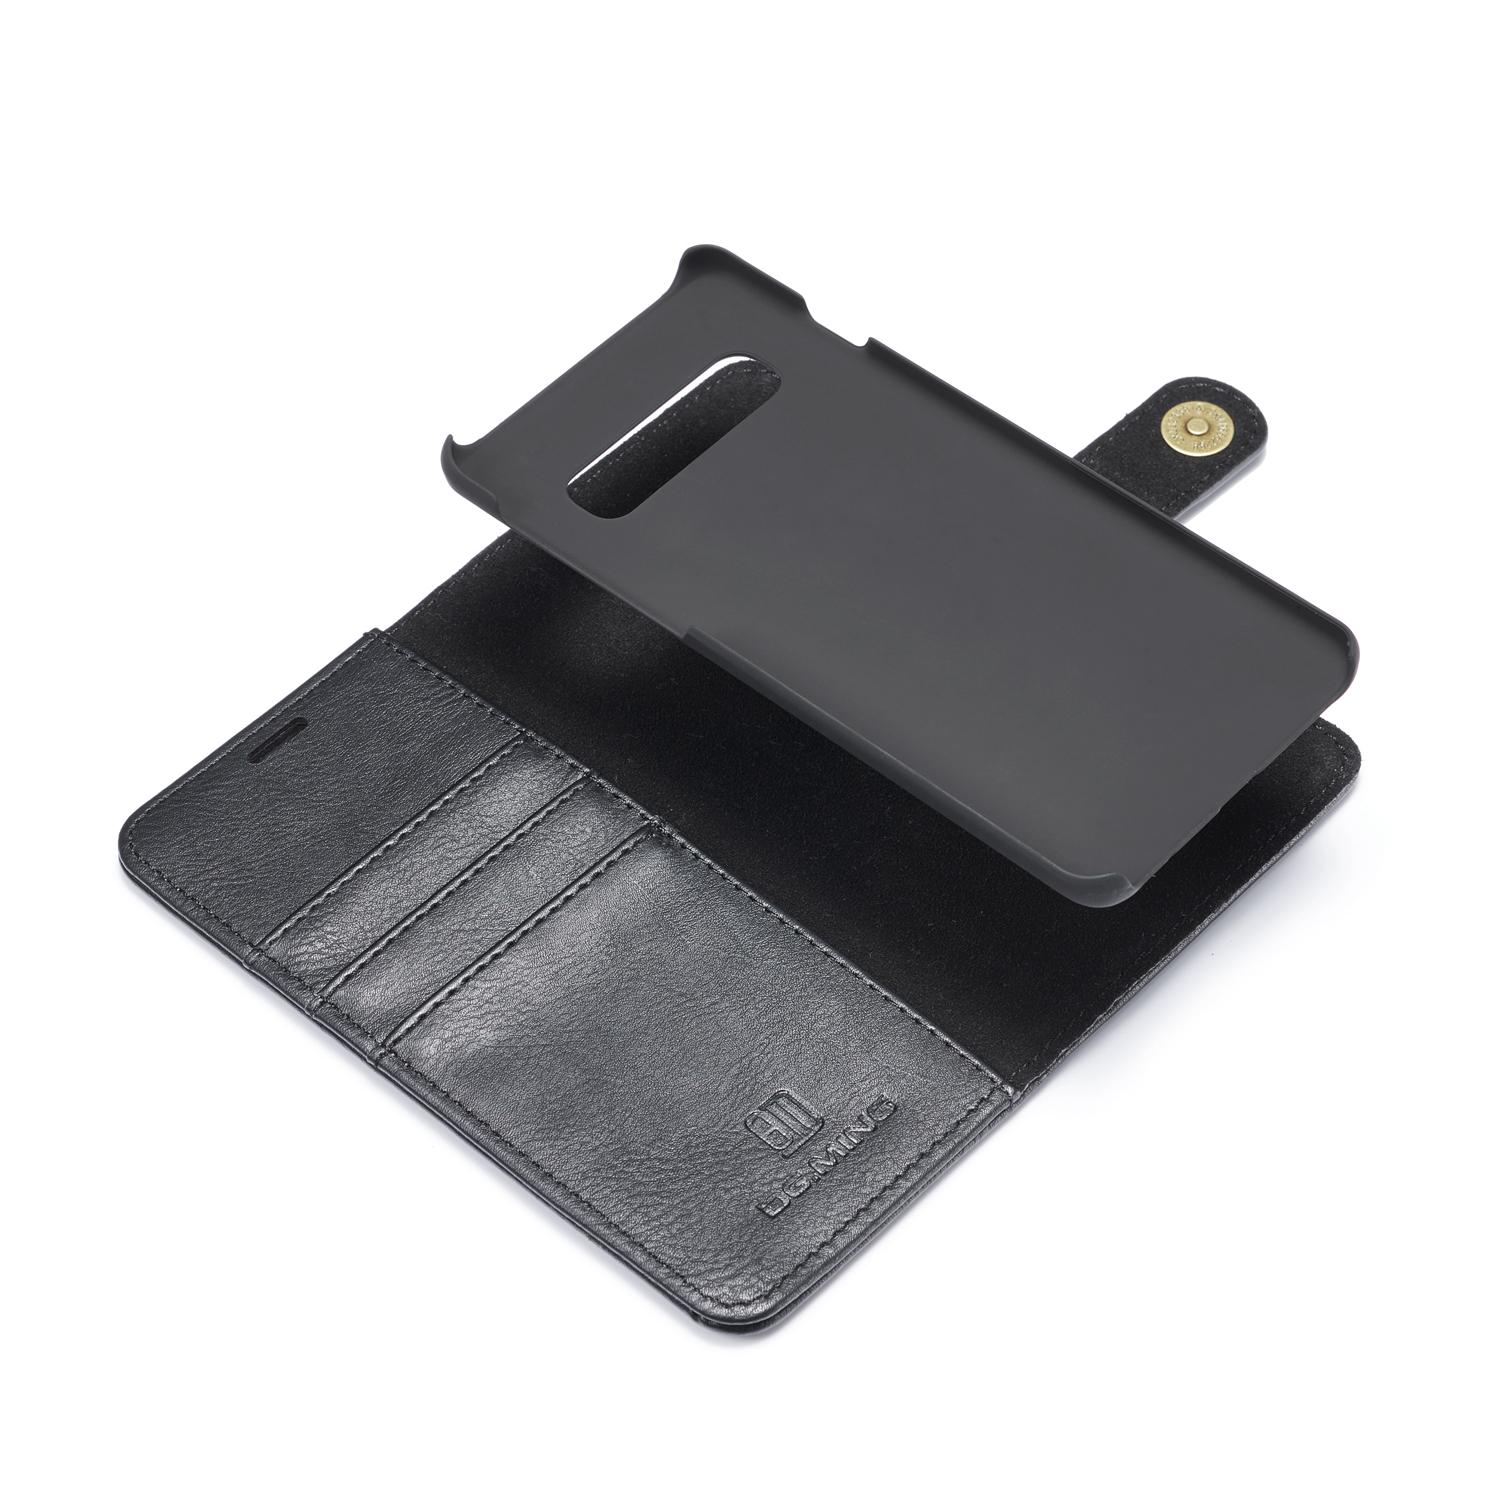 Samsung Galaxy S10 Plus Magnet Wallet Black